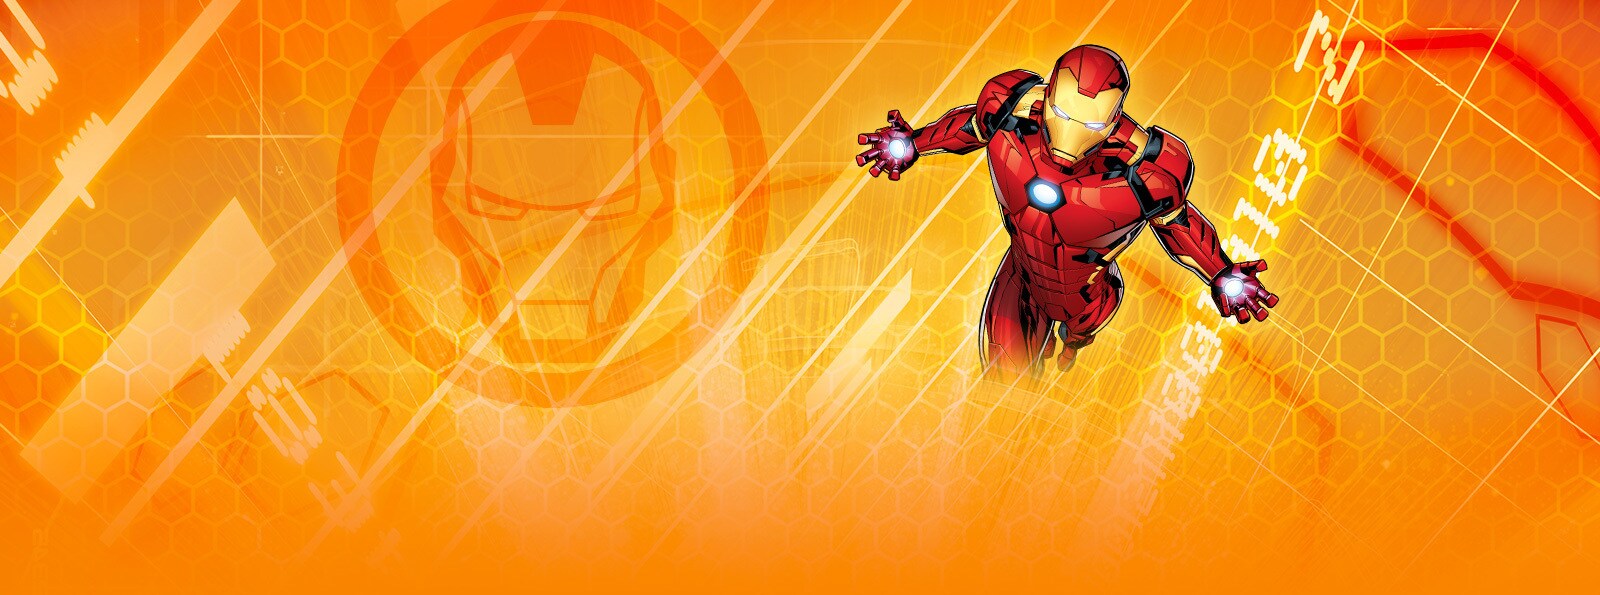 Iron Man Avengers Characters Marvel Hq